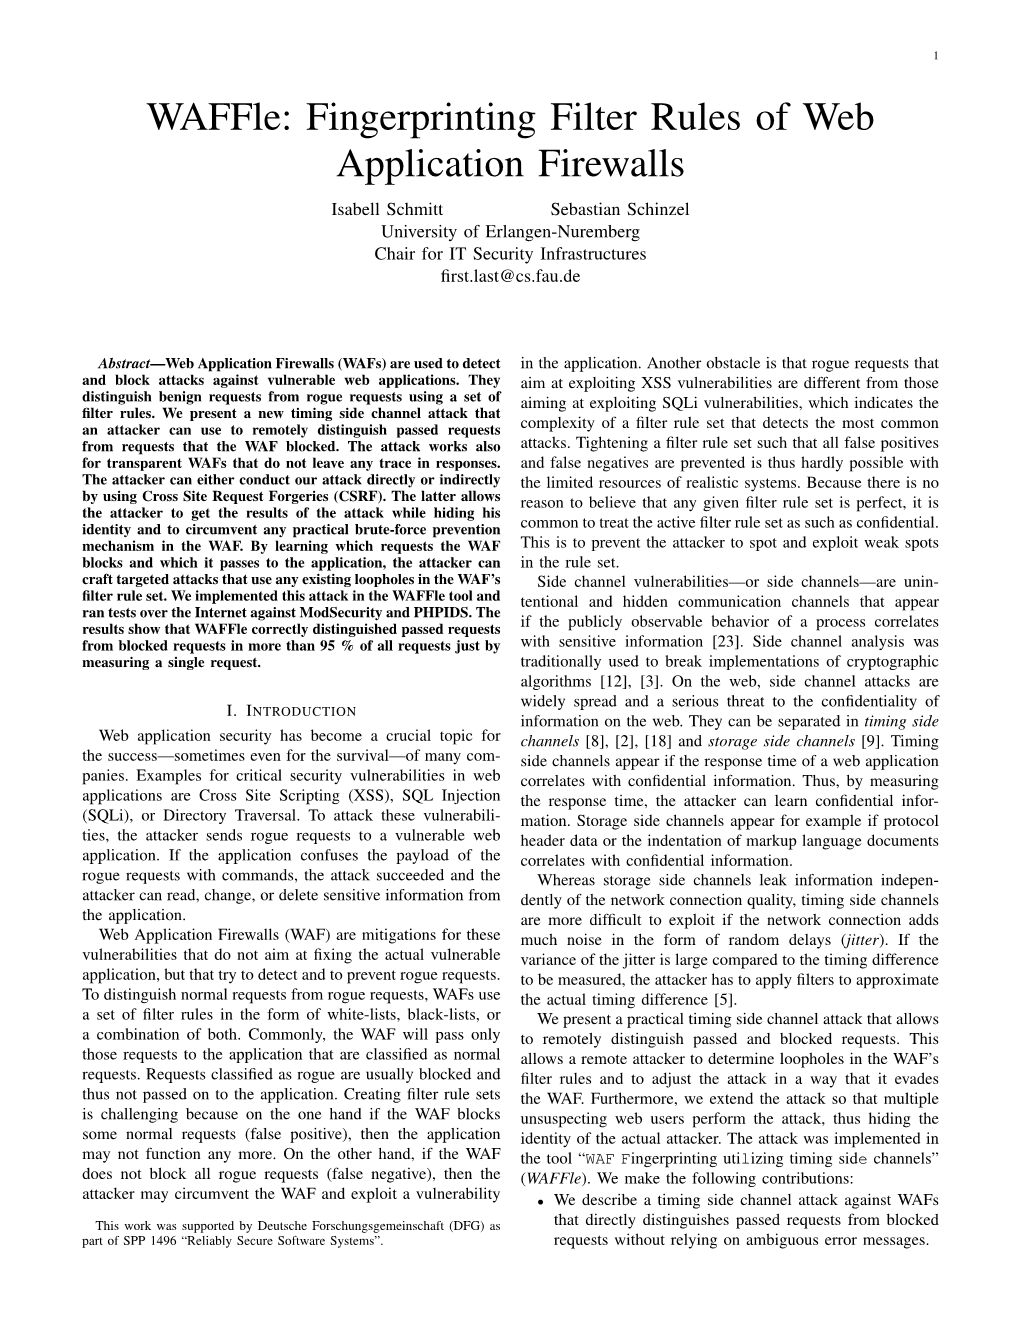 Fingerprinting Filter Rules of Web Application Firewalls